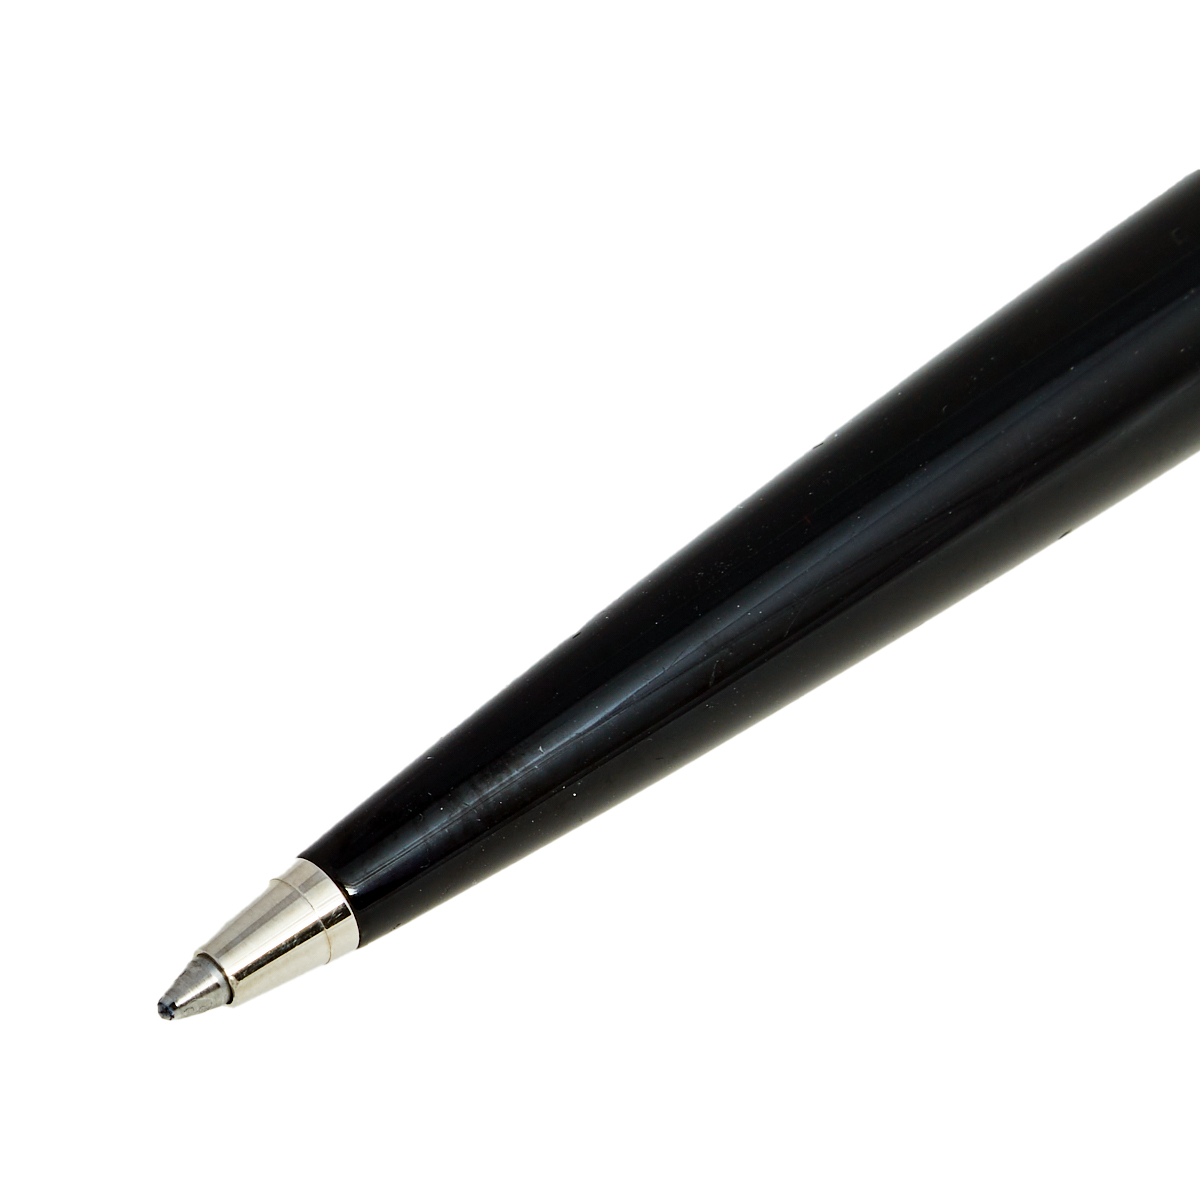 Dior Black Lacquer Ball Point Pen